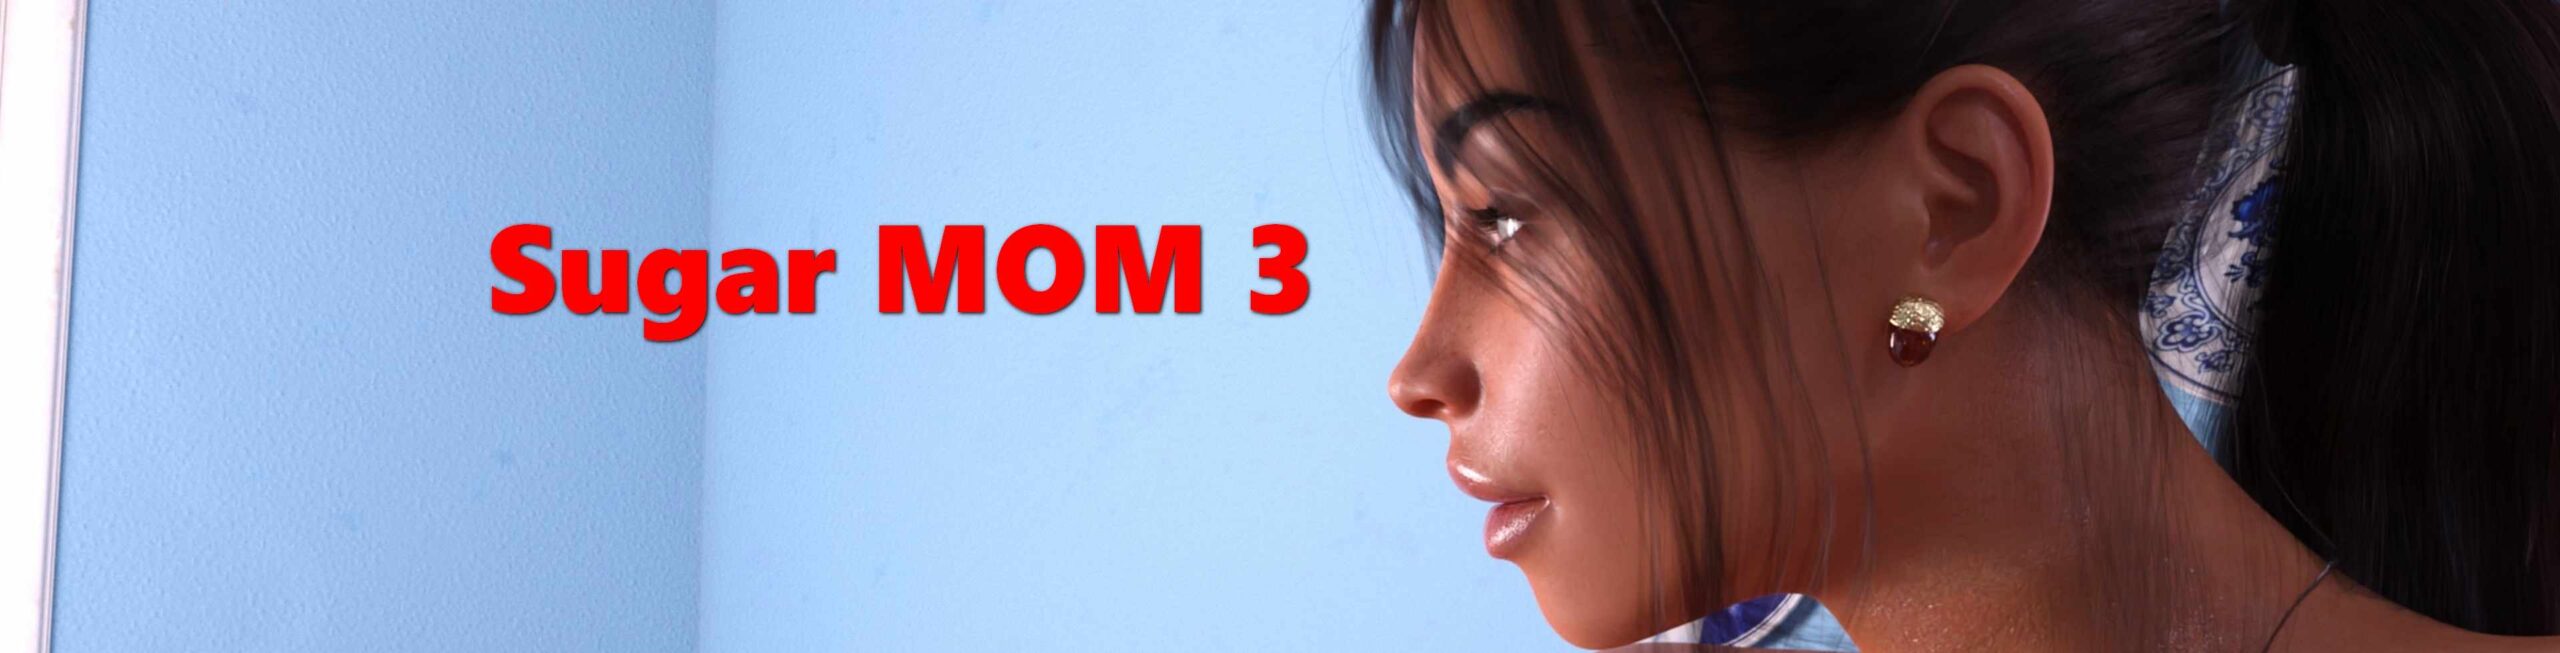 Sugar MOM 3 [Marlis Studio] Adult xxx Game Download